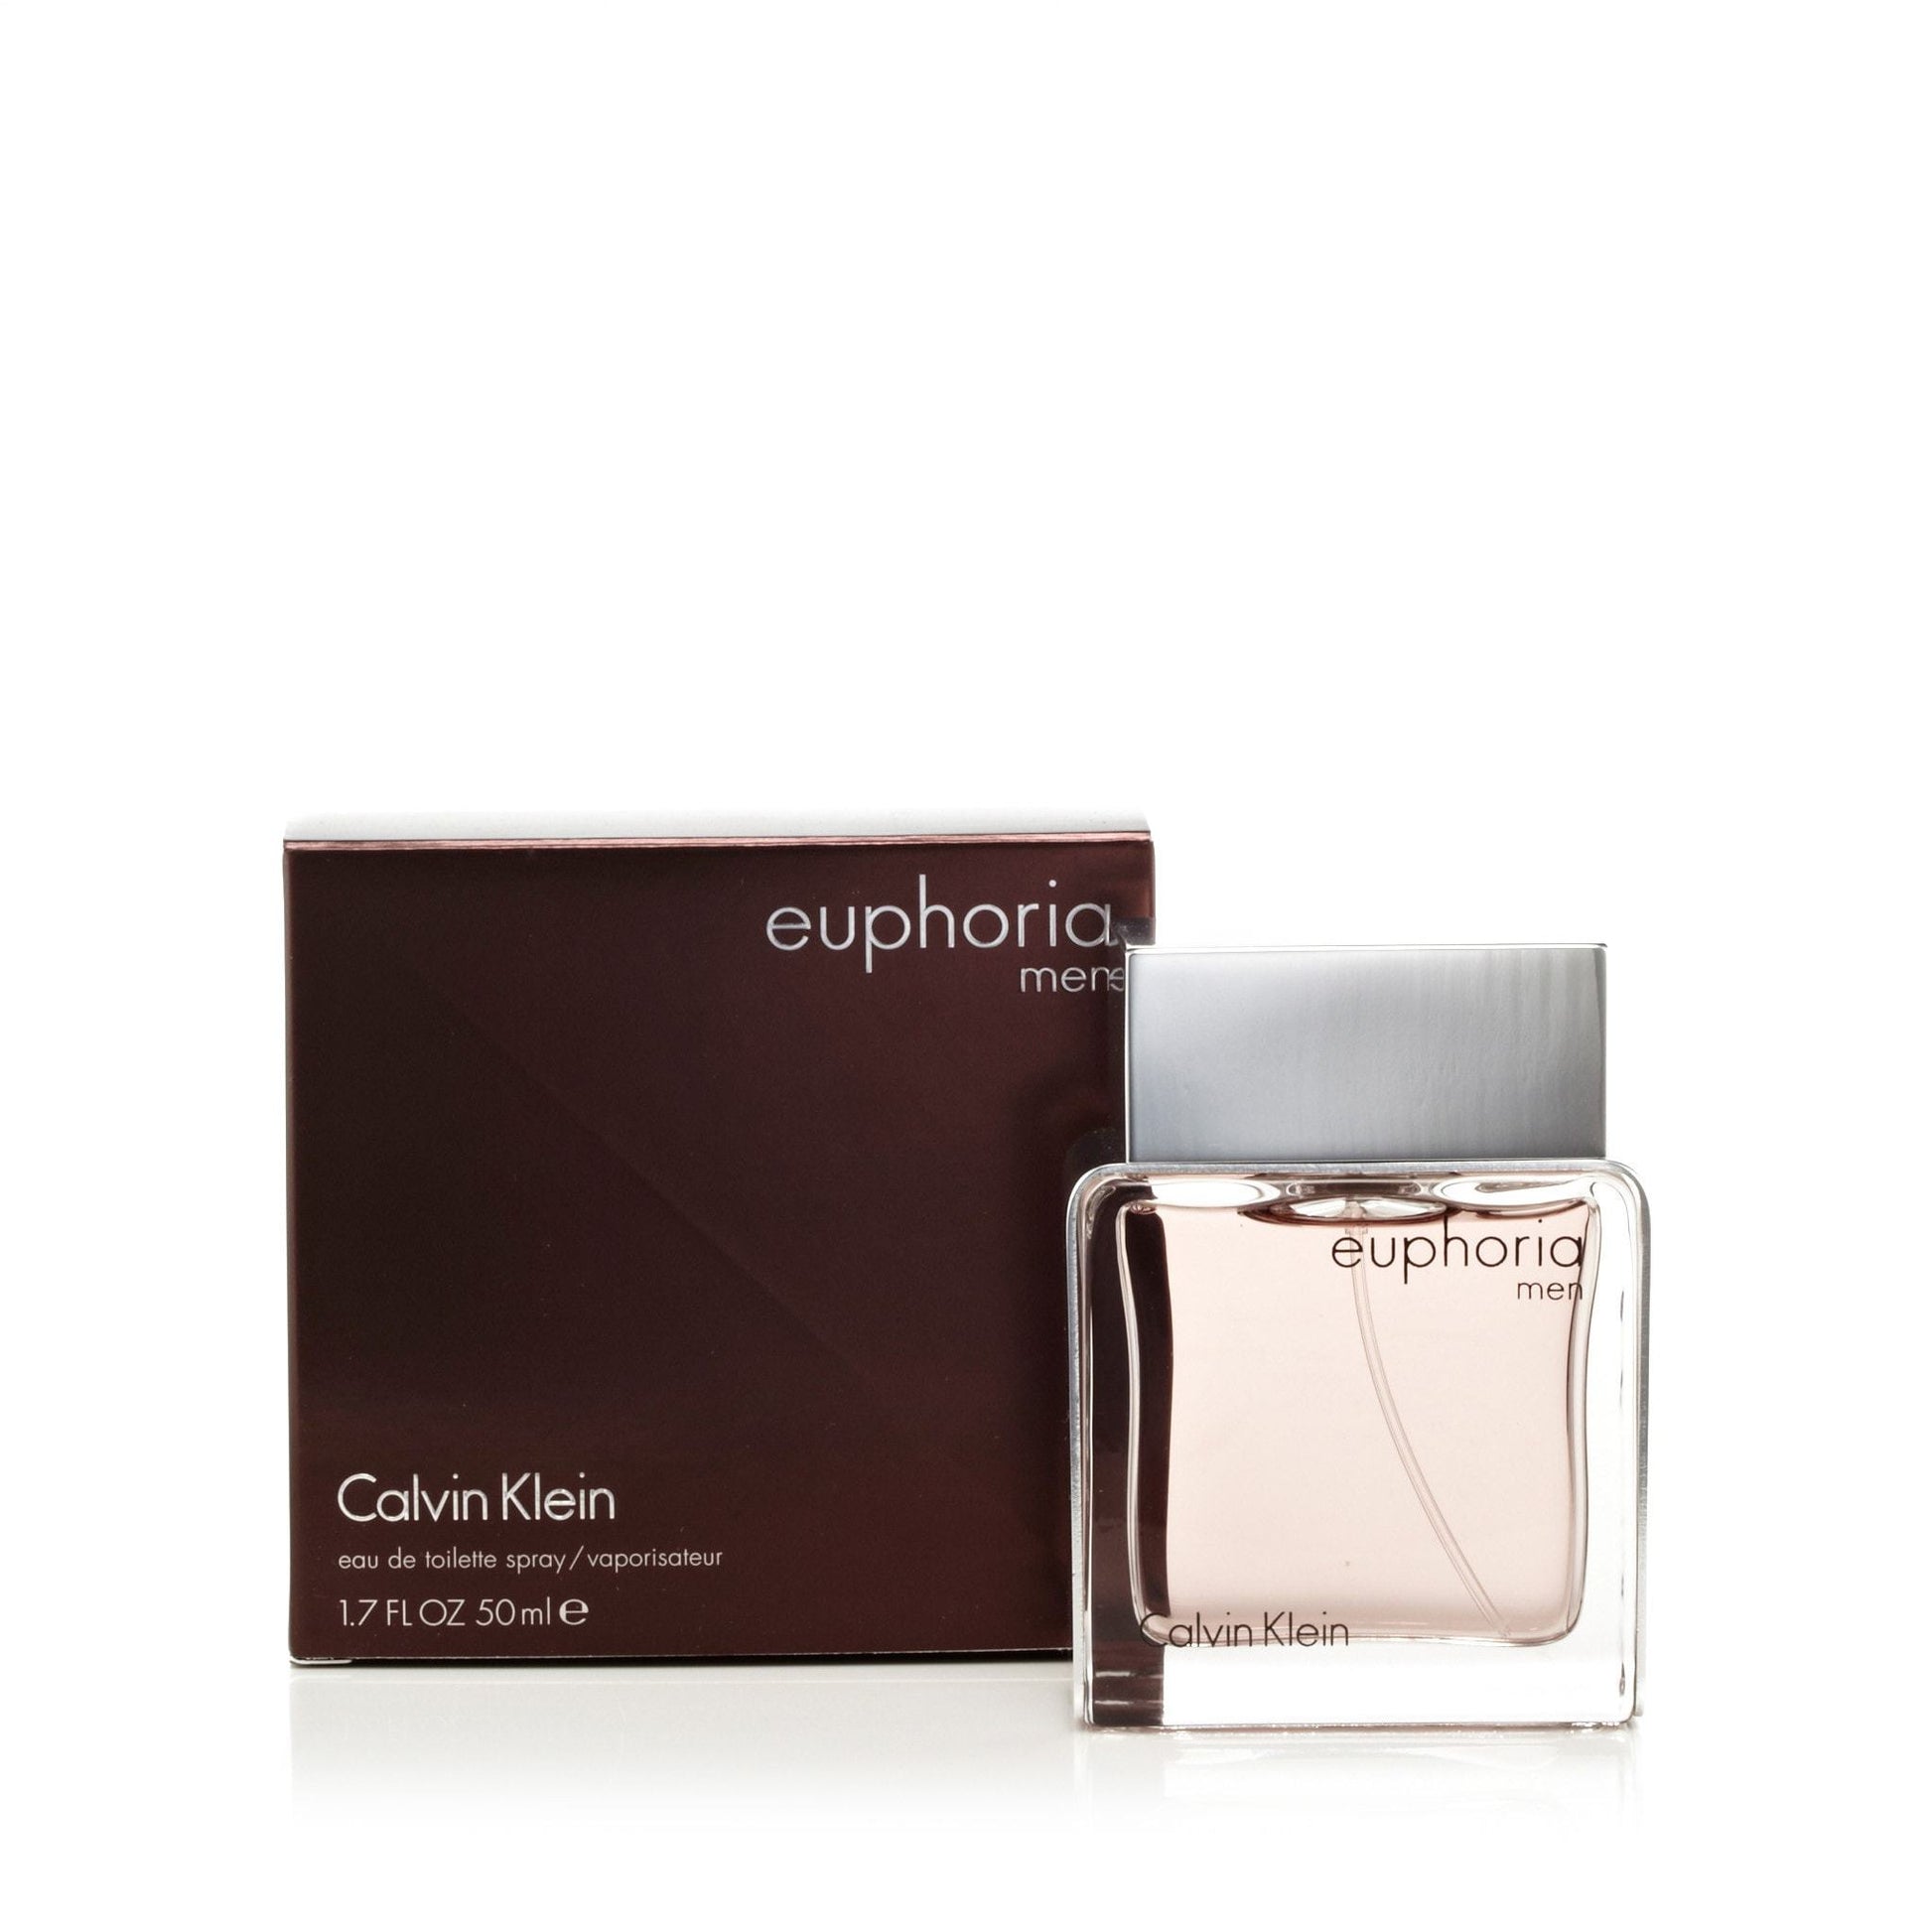 Euphoria Eau de Toilette Spray for Men by Calvin Klein, Product image 5